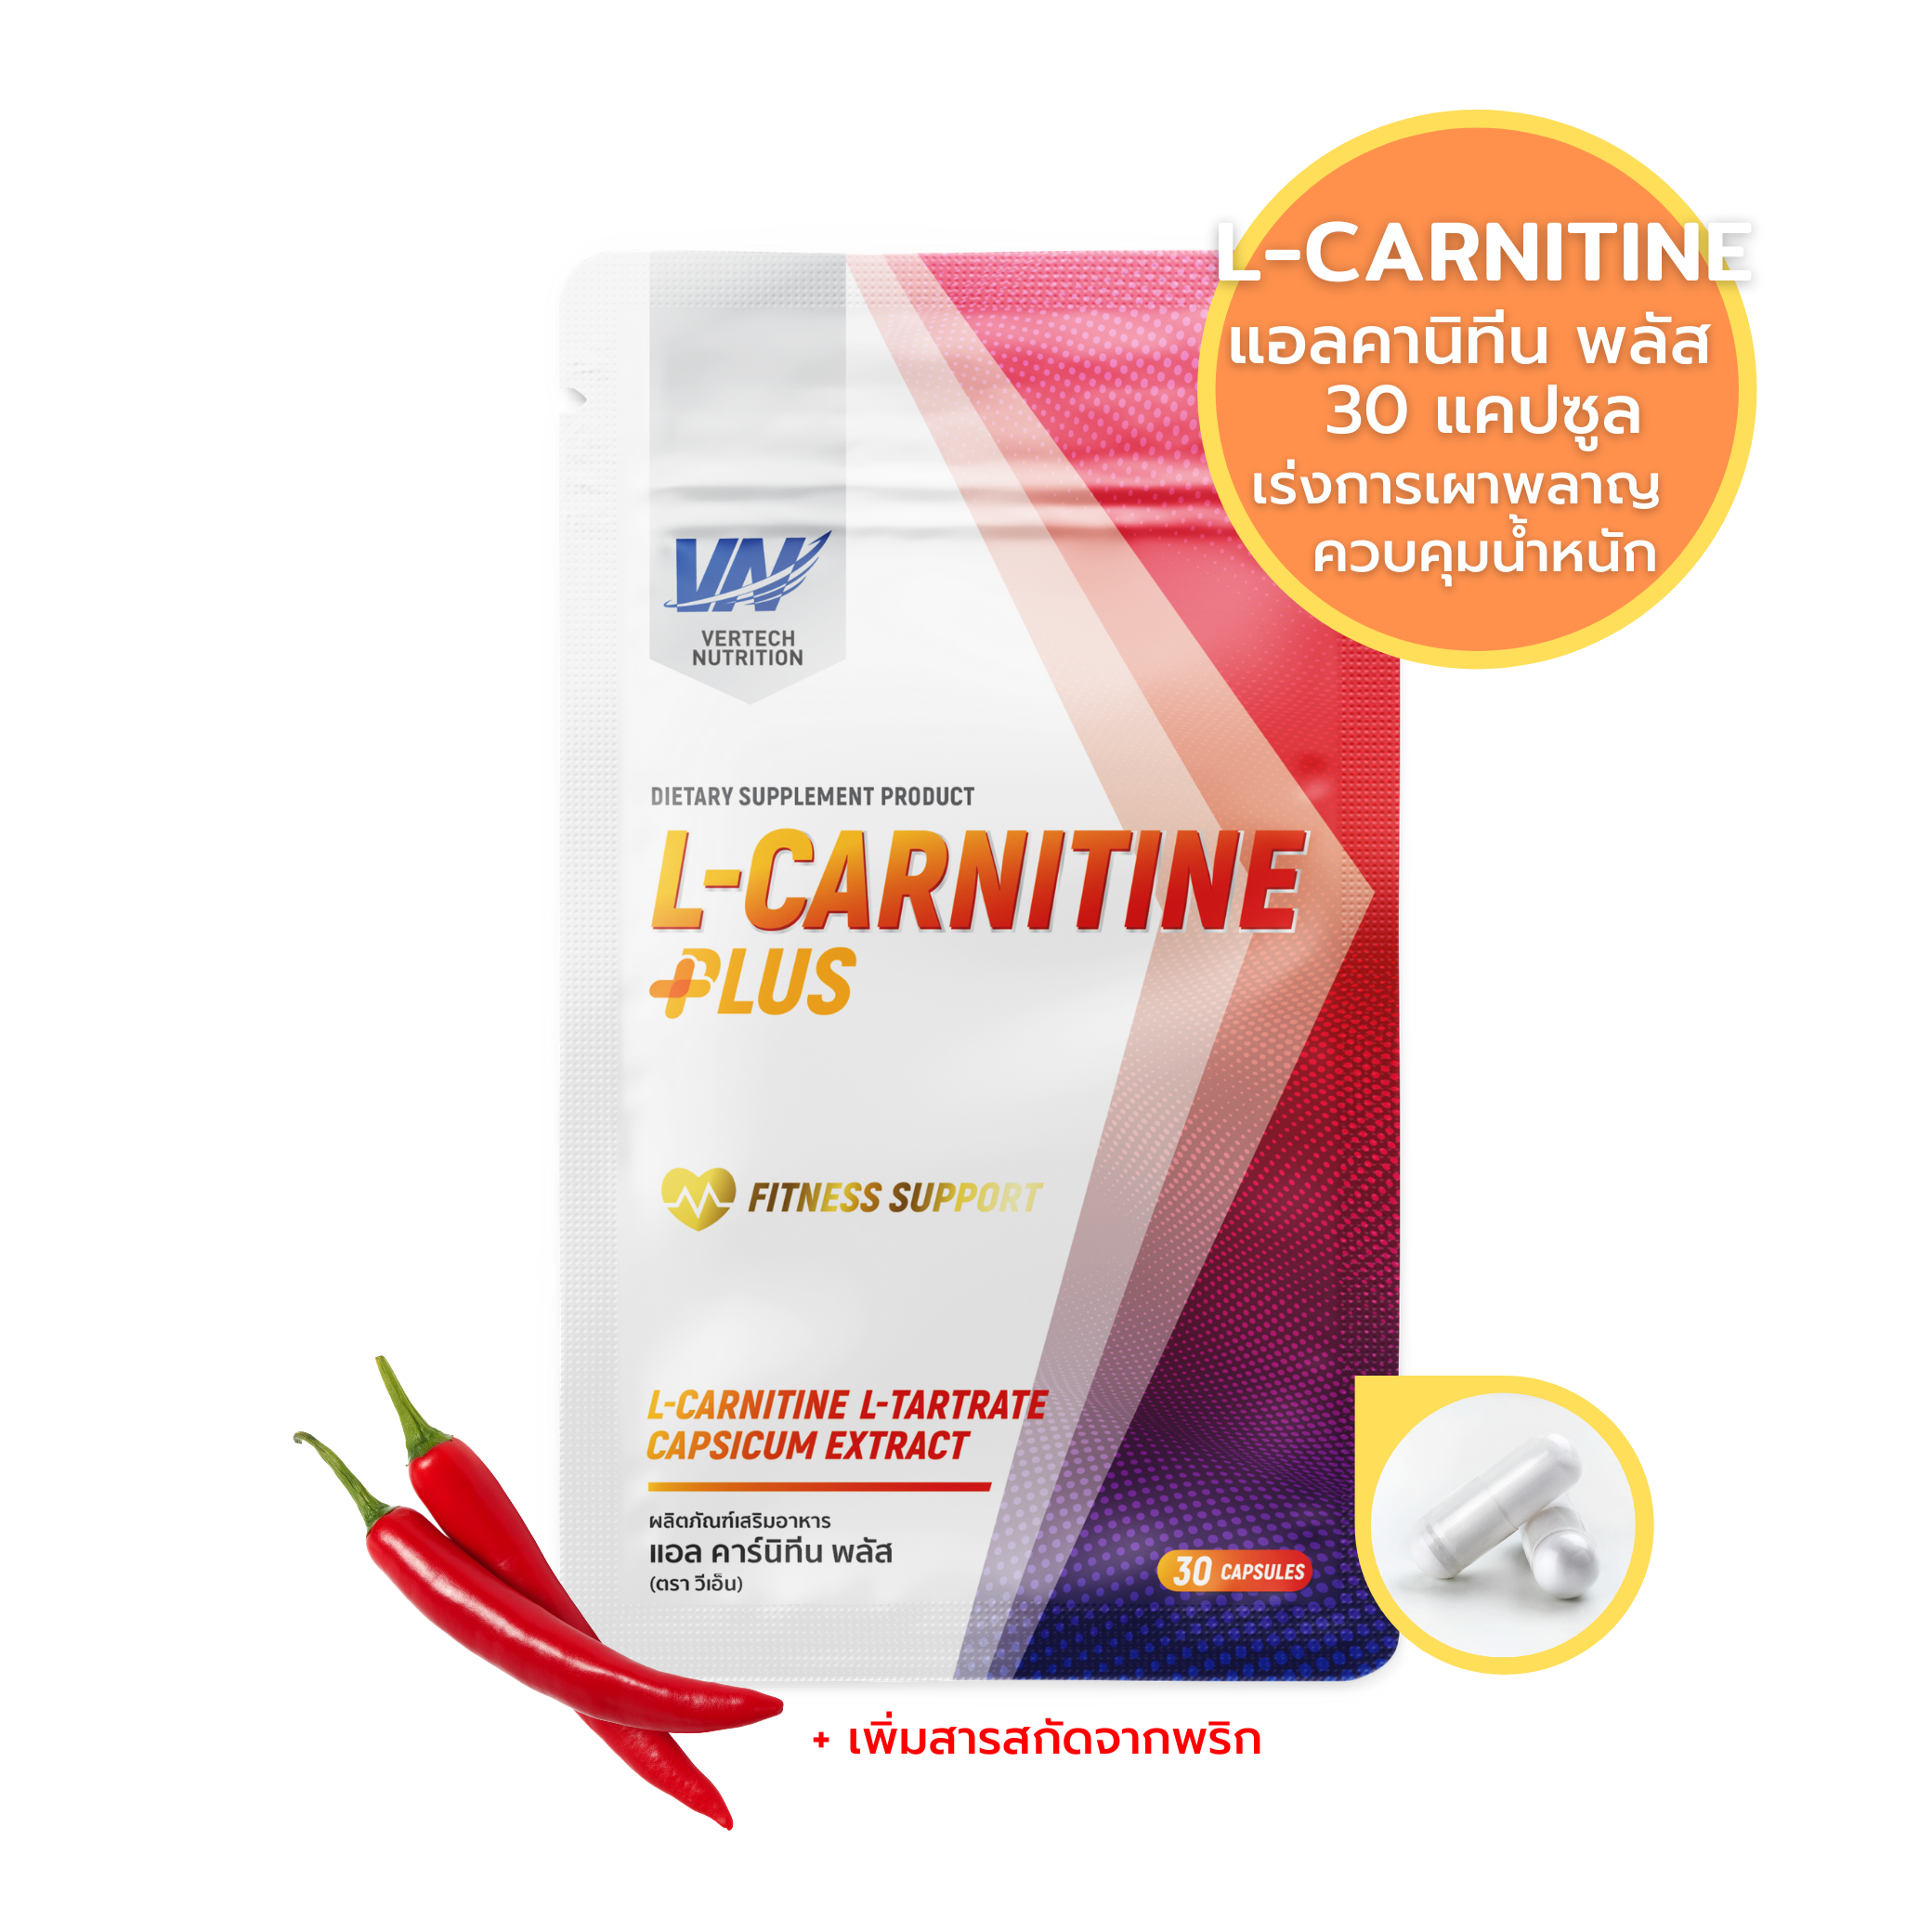 VERTECH NUTRITION แอลคาร์นิทีน พลัส 30 แคปซูล เวอร์เทคนูทริชั่น VERTECH NUTRITION L-Carnitine Plus 30 capsules (อาหารเสริม, ออกกำลังกาย, ควบคุมน้ำหนัก)